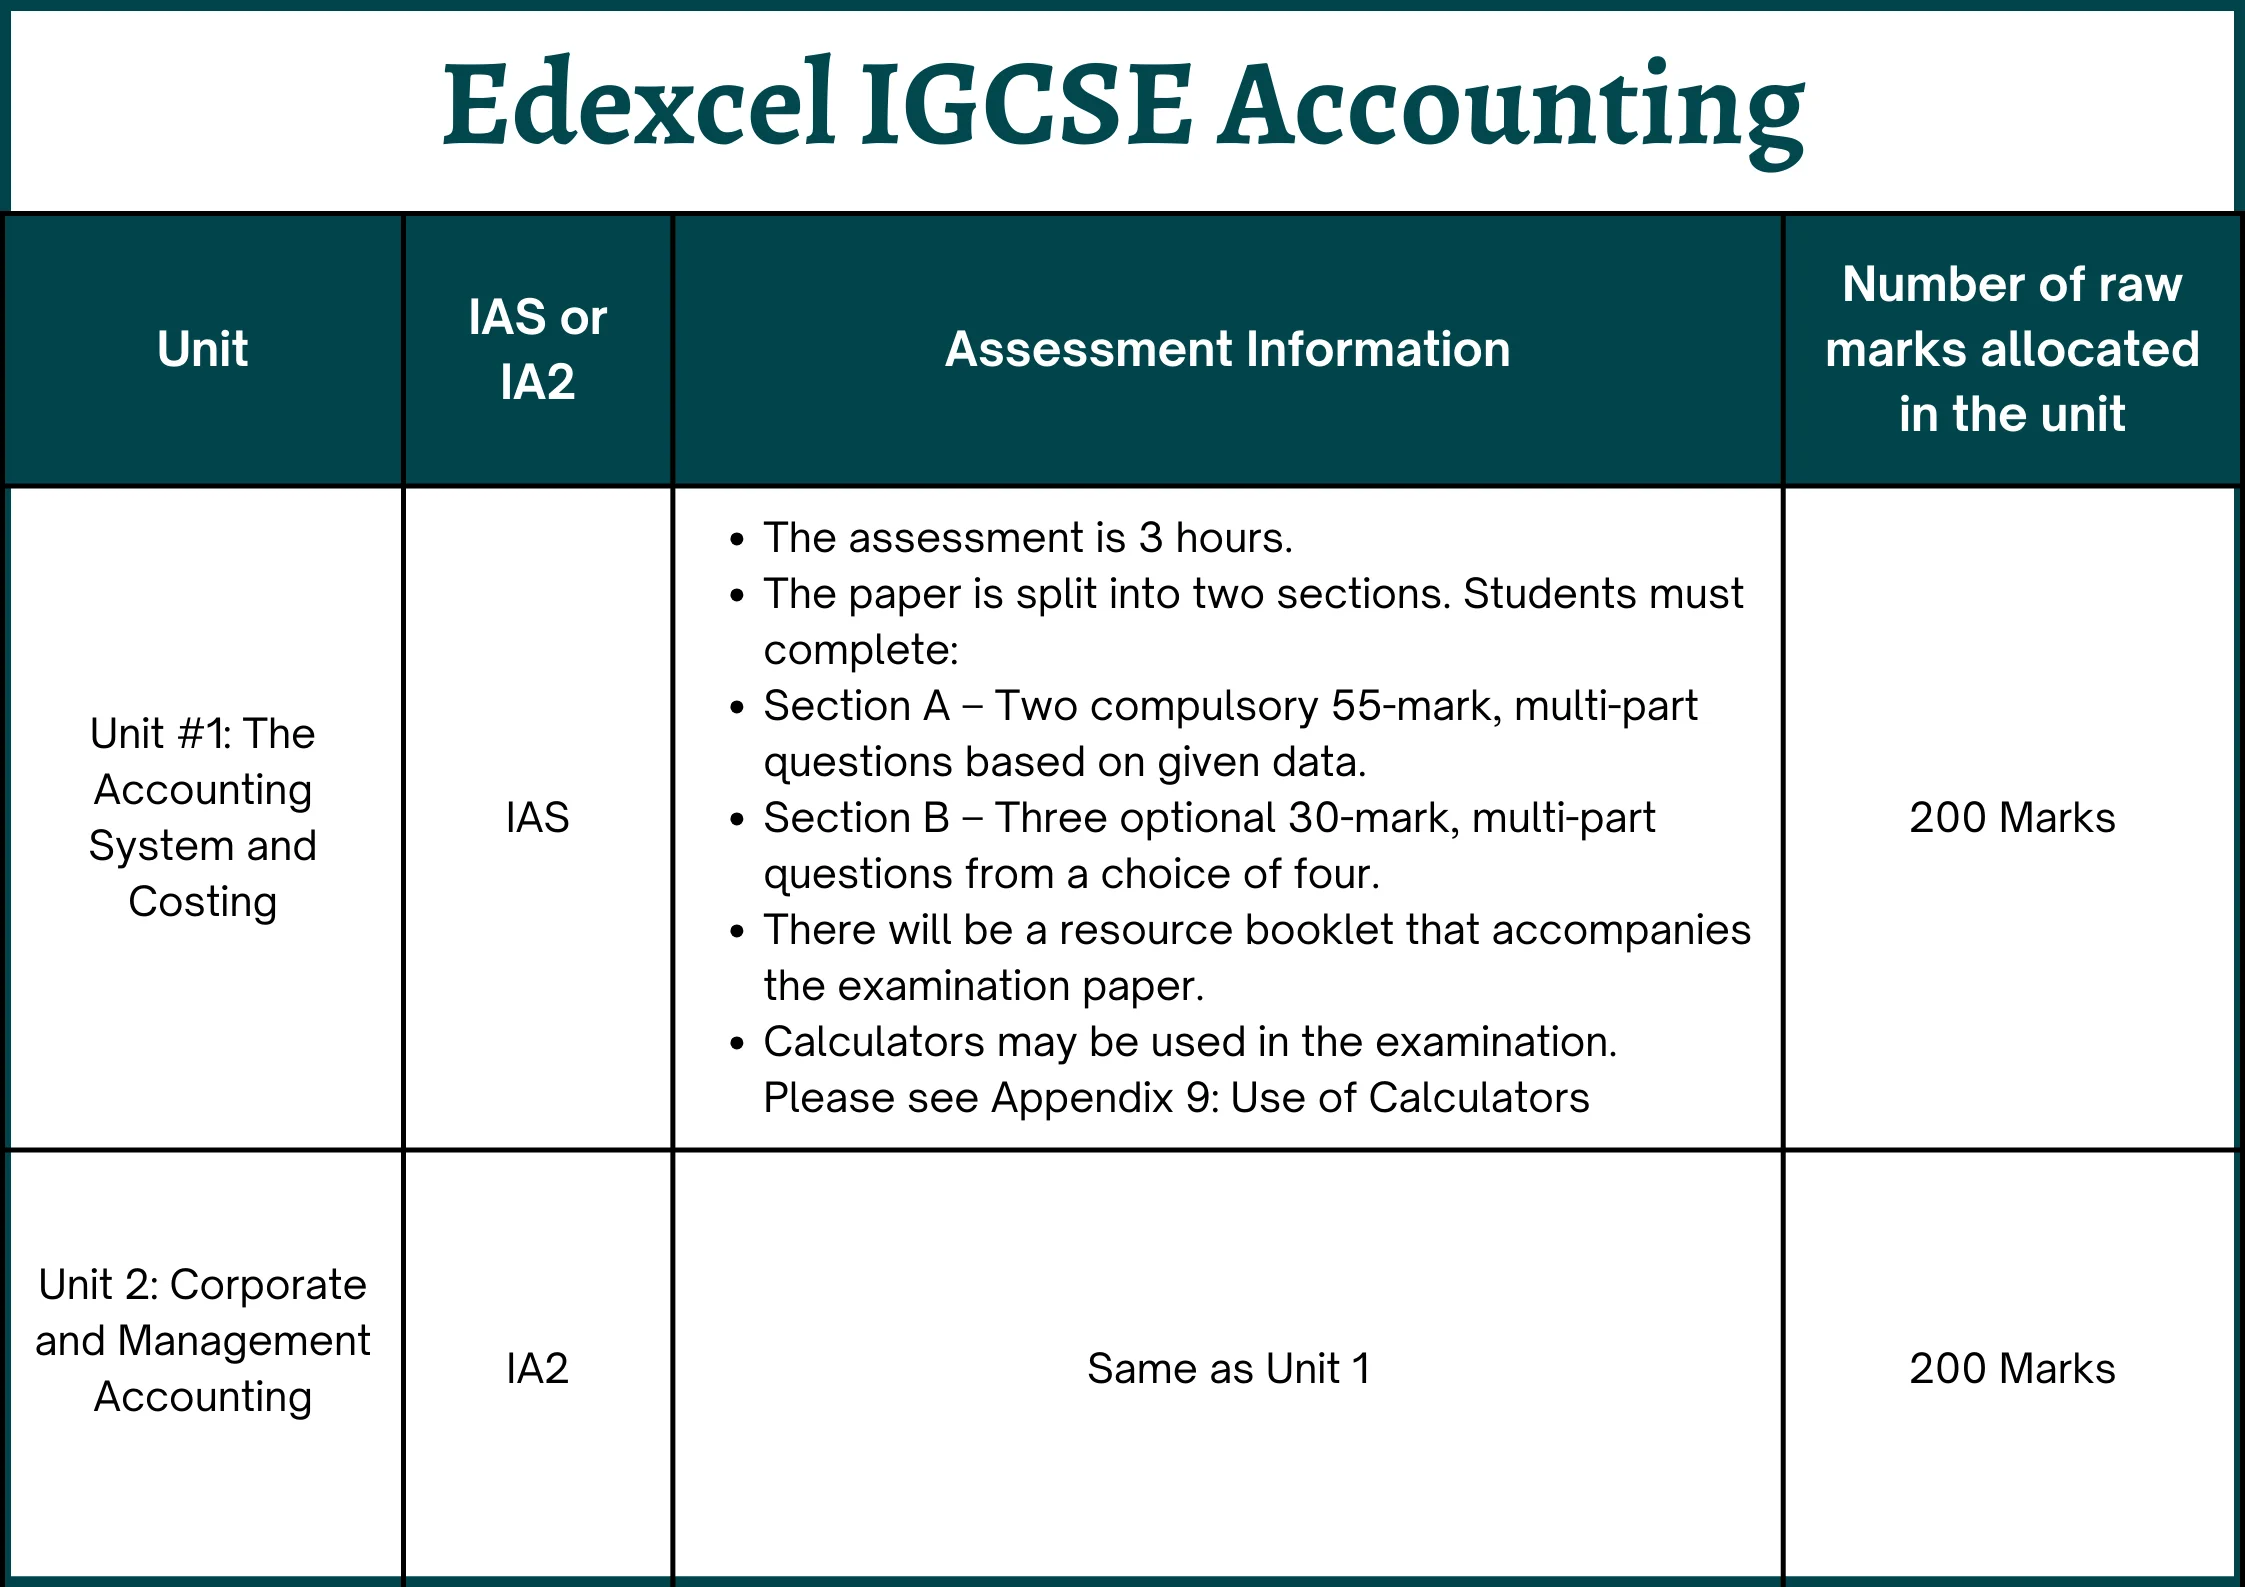 EDEXCEL IGCSE Accounting Assement